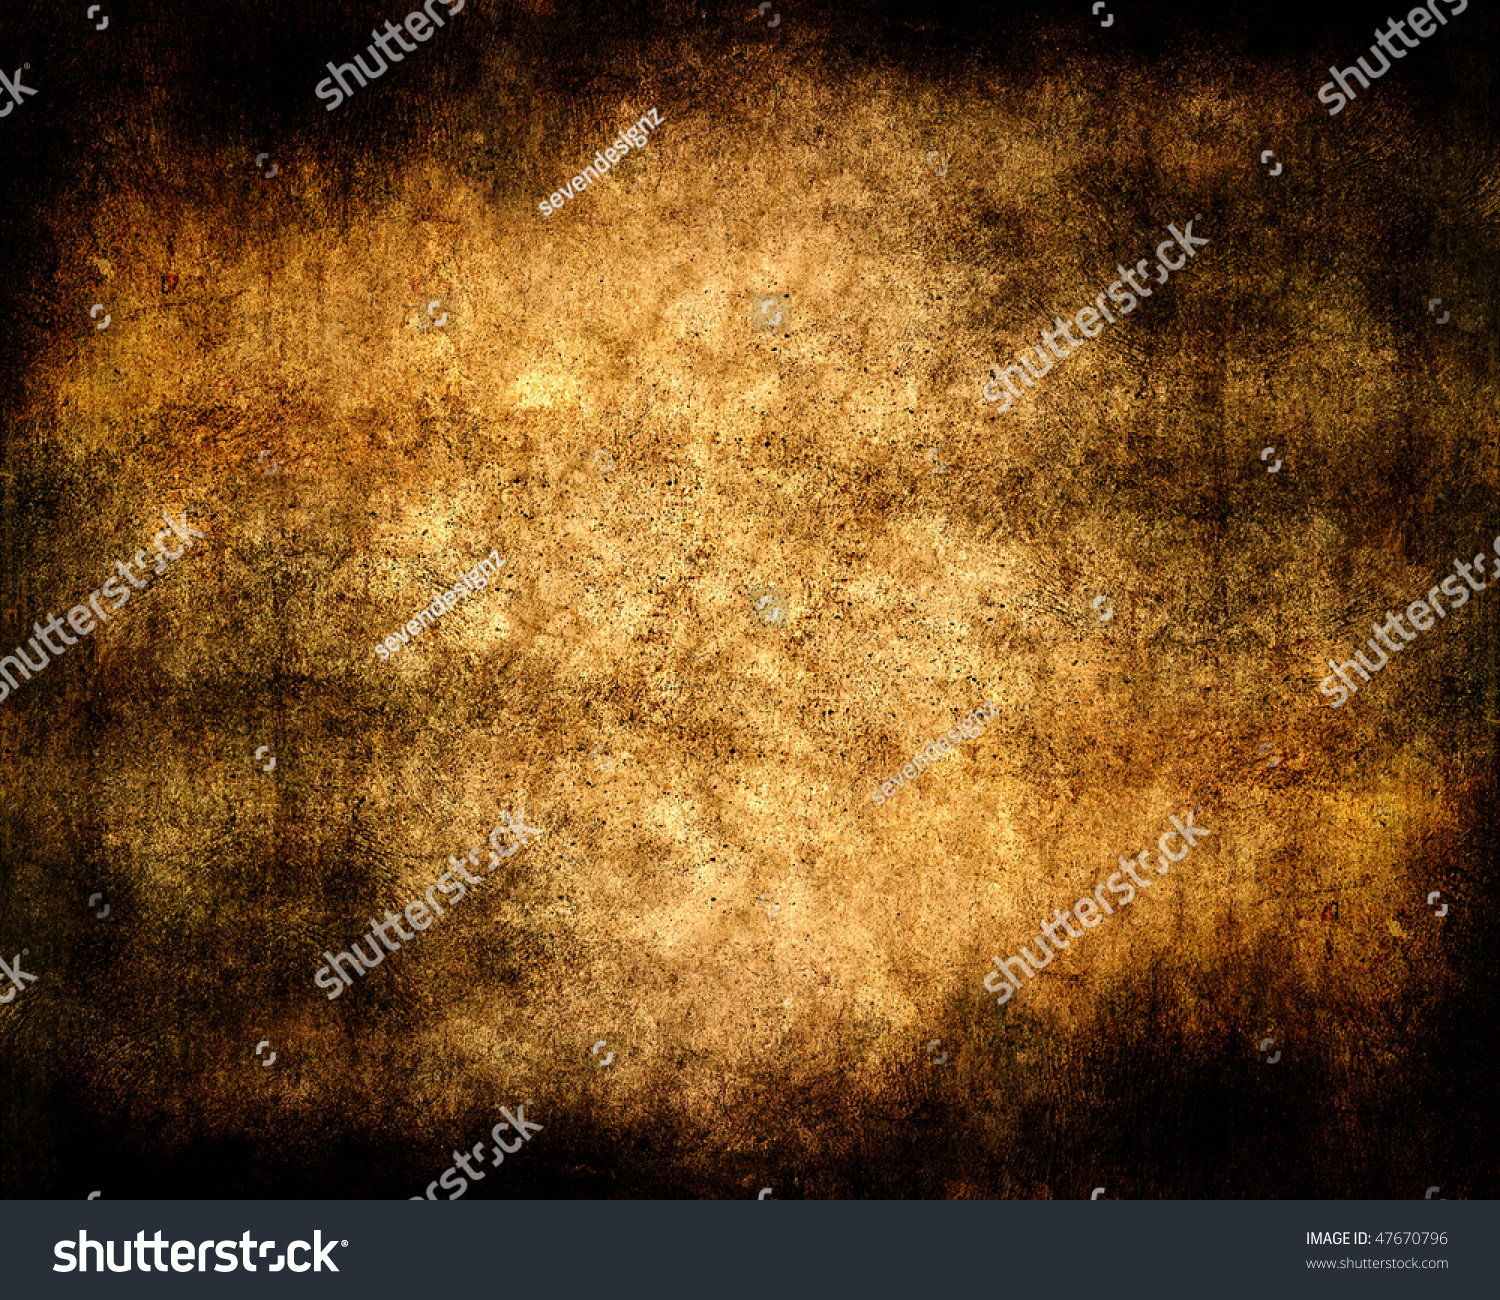 Mixed Abstract Grunge Texture Stock Illustration 47670796 - Shutterstock